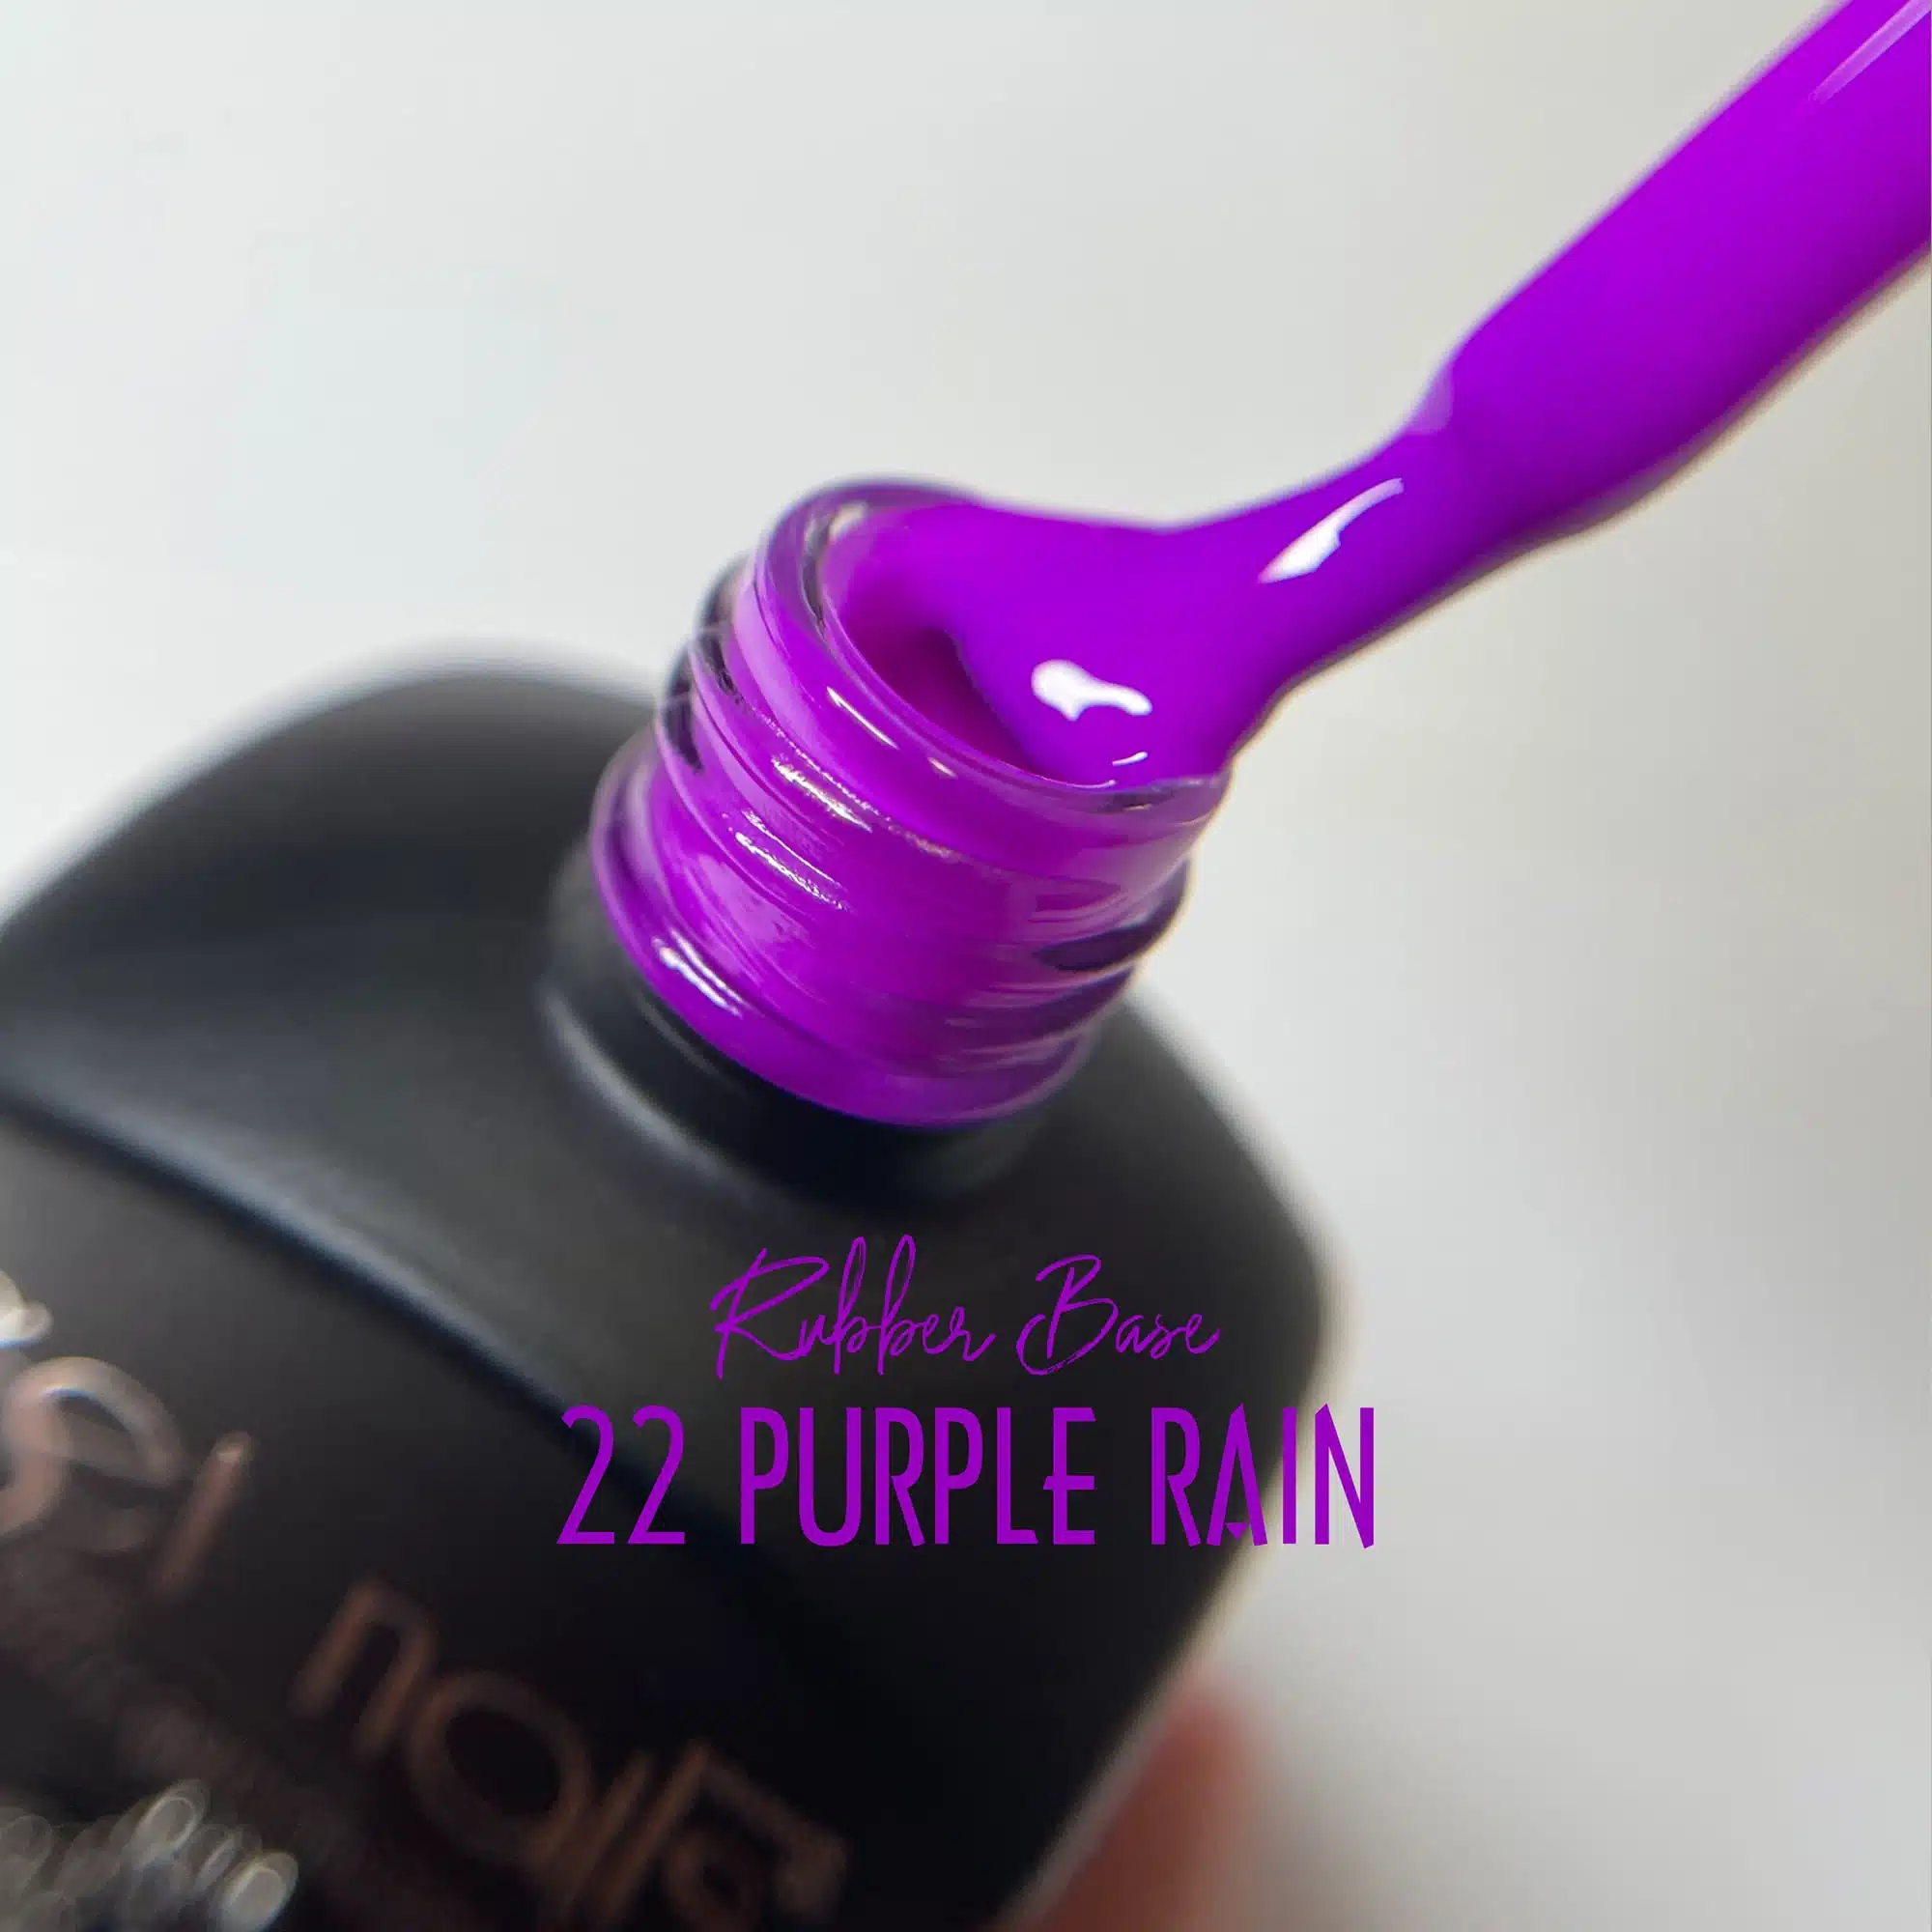 Get Nails Austria - GetLac Rubber Base 22 Purple Rain 15g